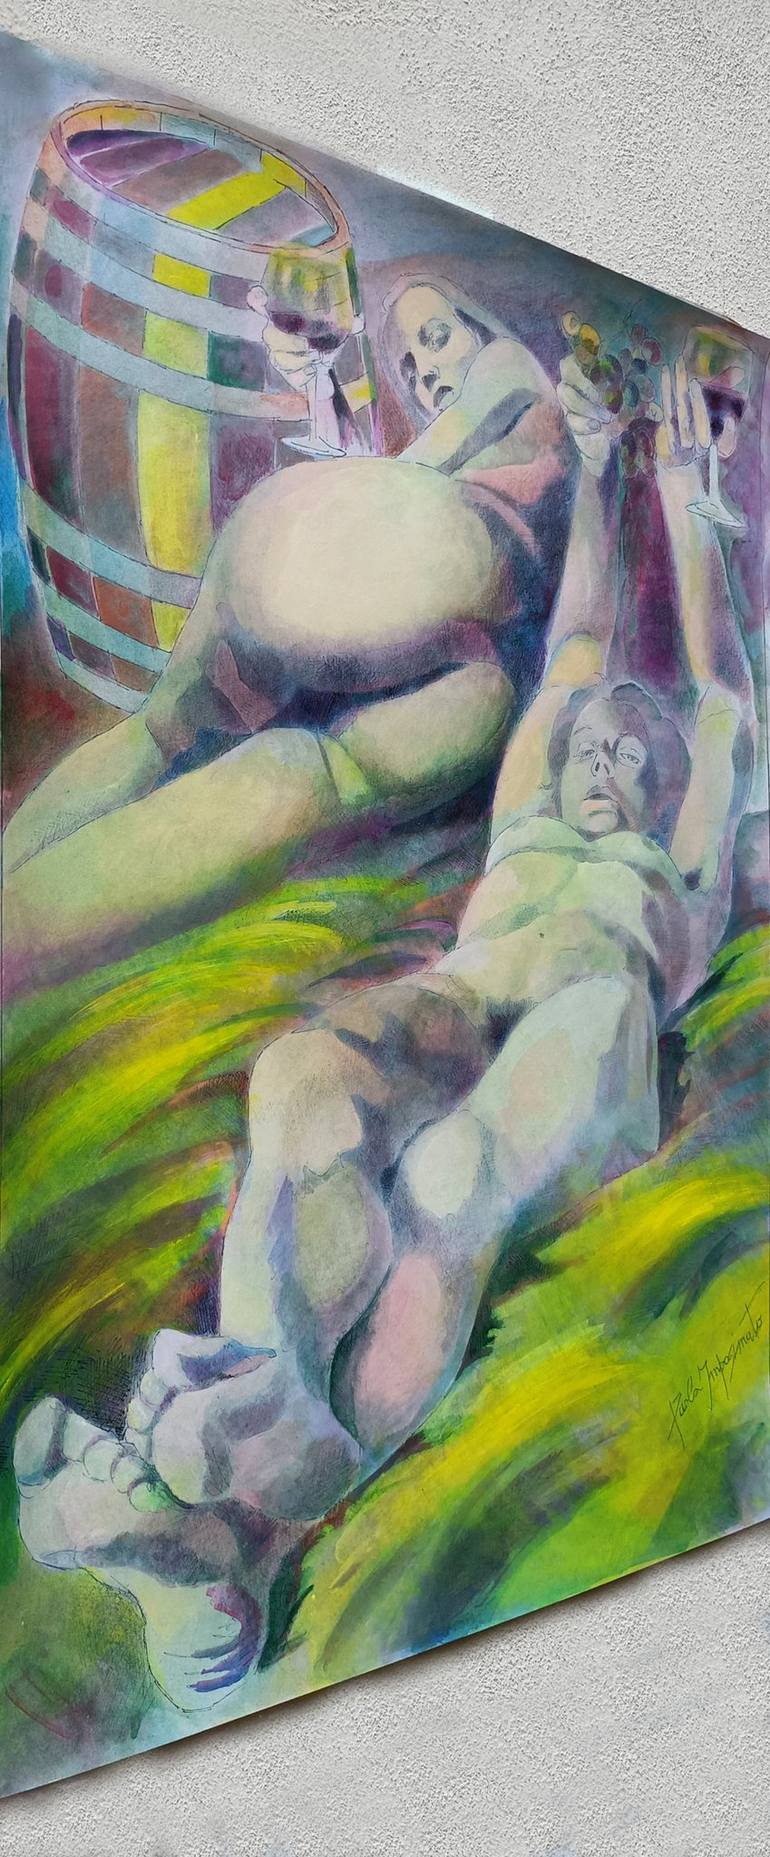 Original Fine Art Nude Painting by Paola Imposimato